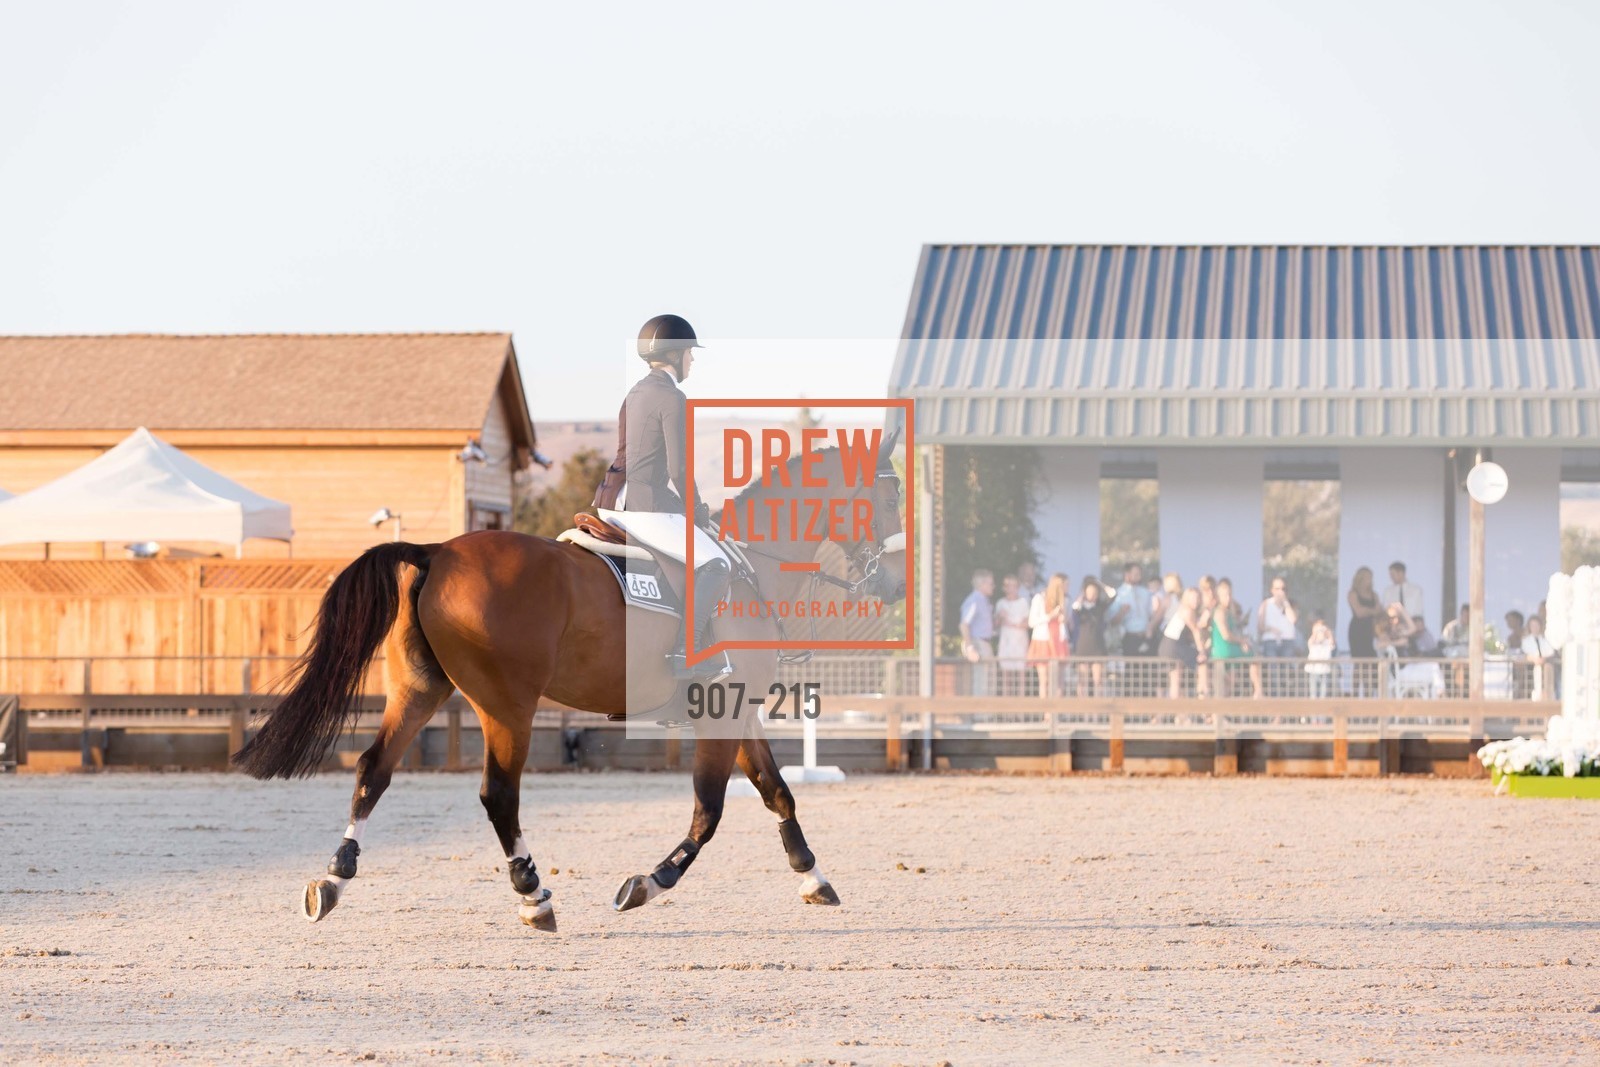 Horse Show, Photo #907-215